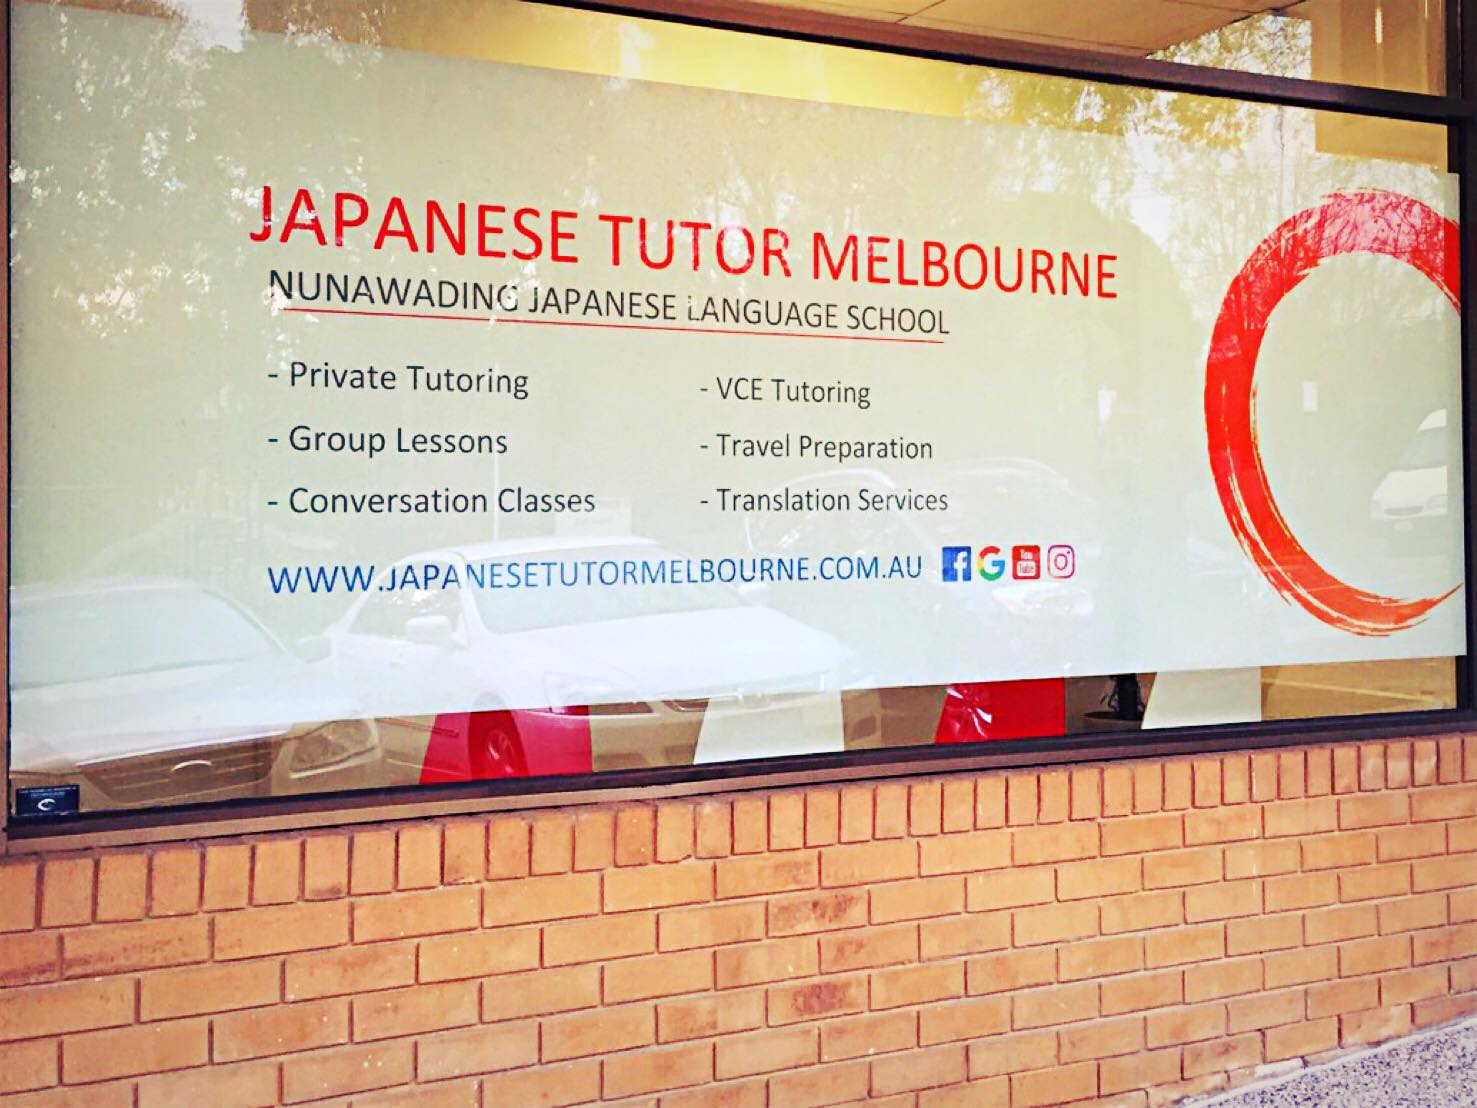 Japanese Tutor Melbourne - Nunawading Japanese School | 8A Wood Street, Nunawading, Victoria 3131 | +61 421 234 951